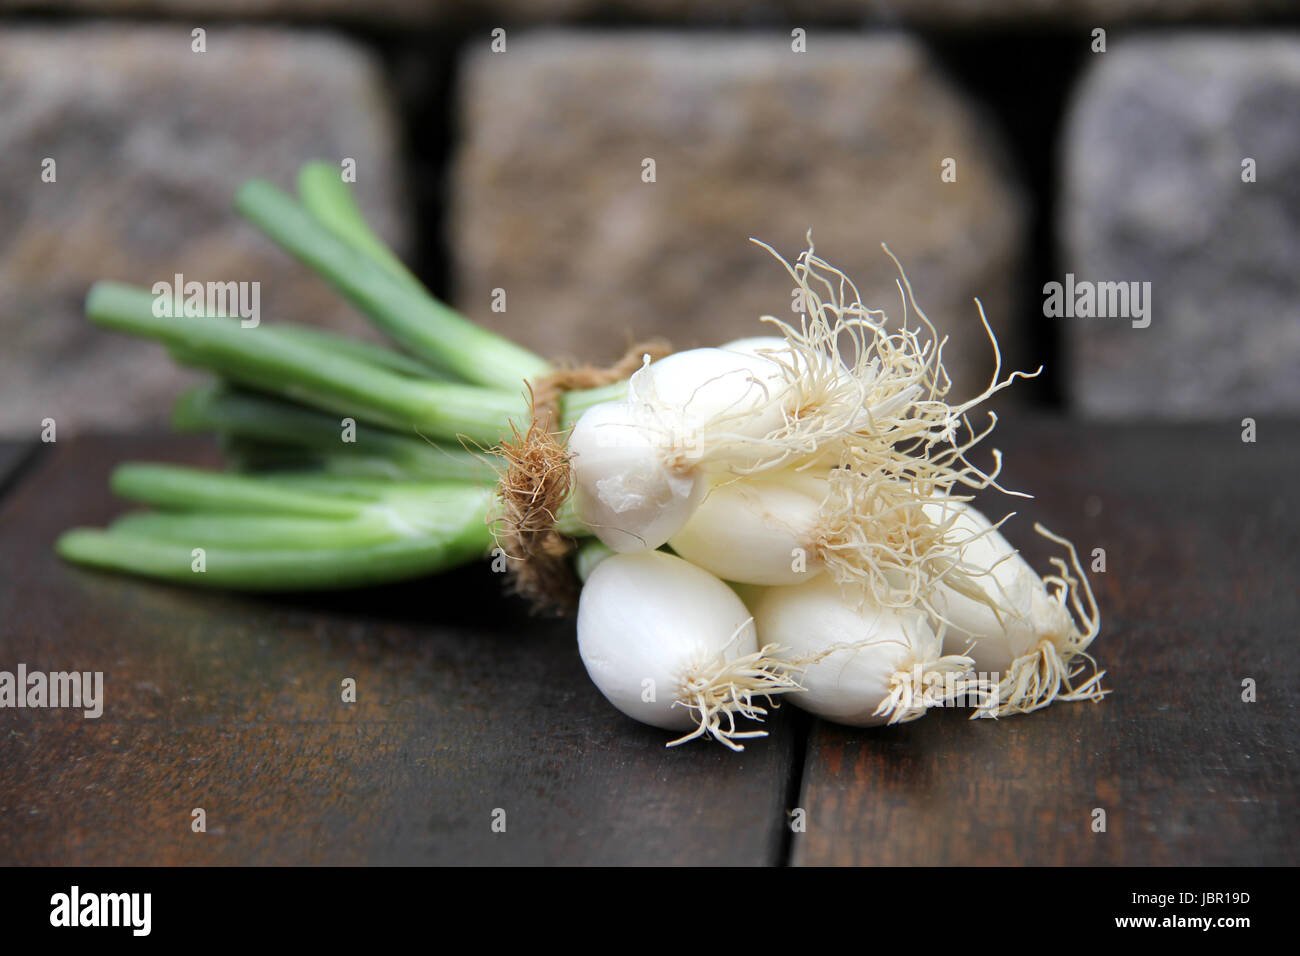 league onions Stock Photo